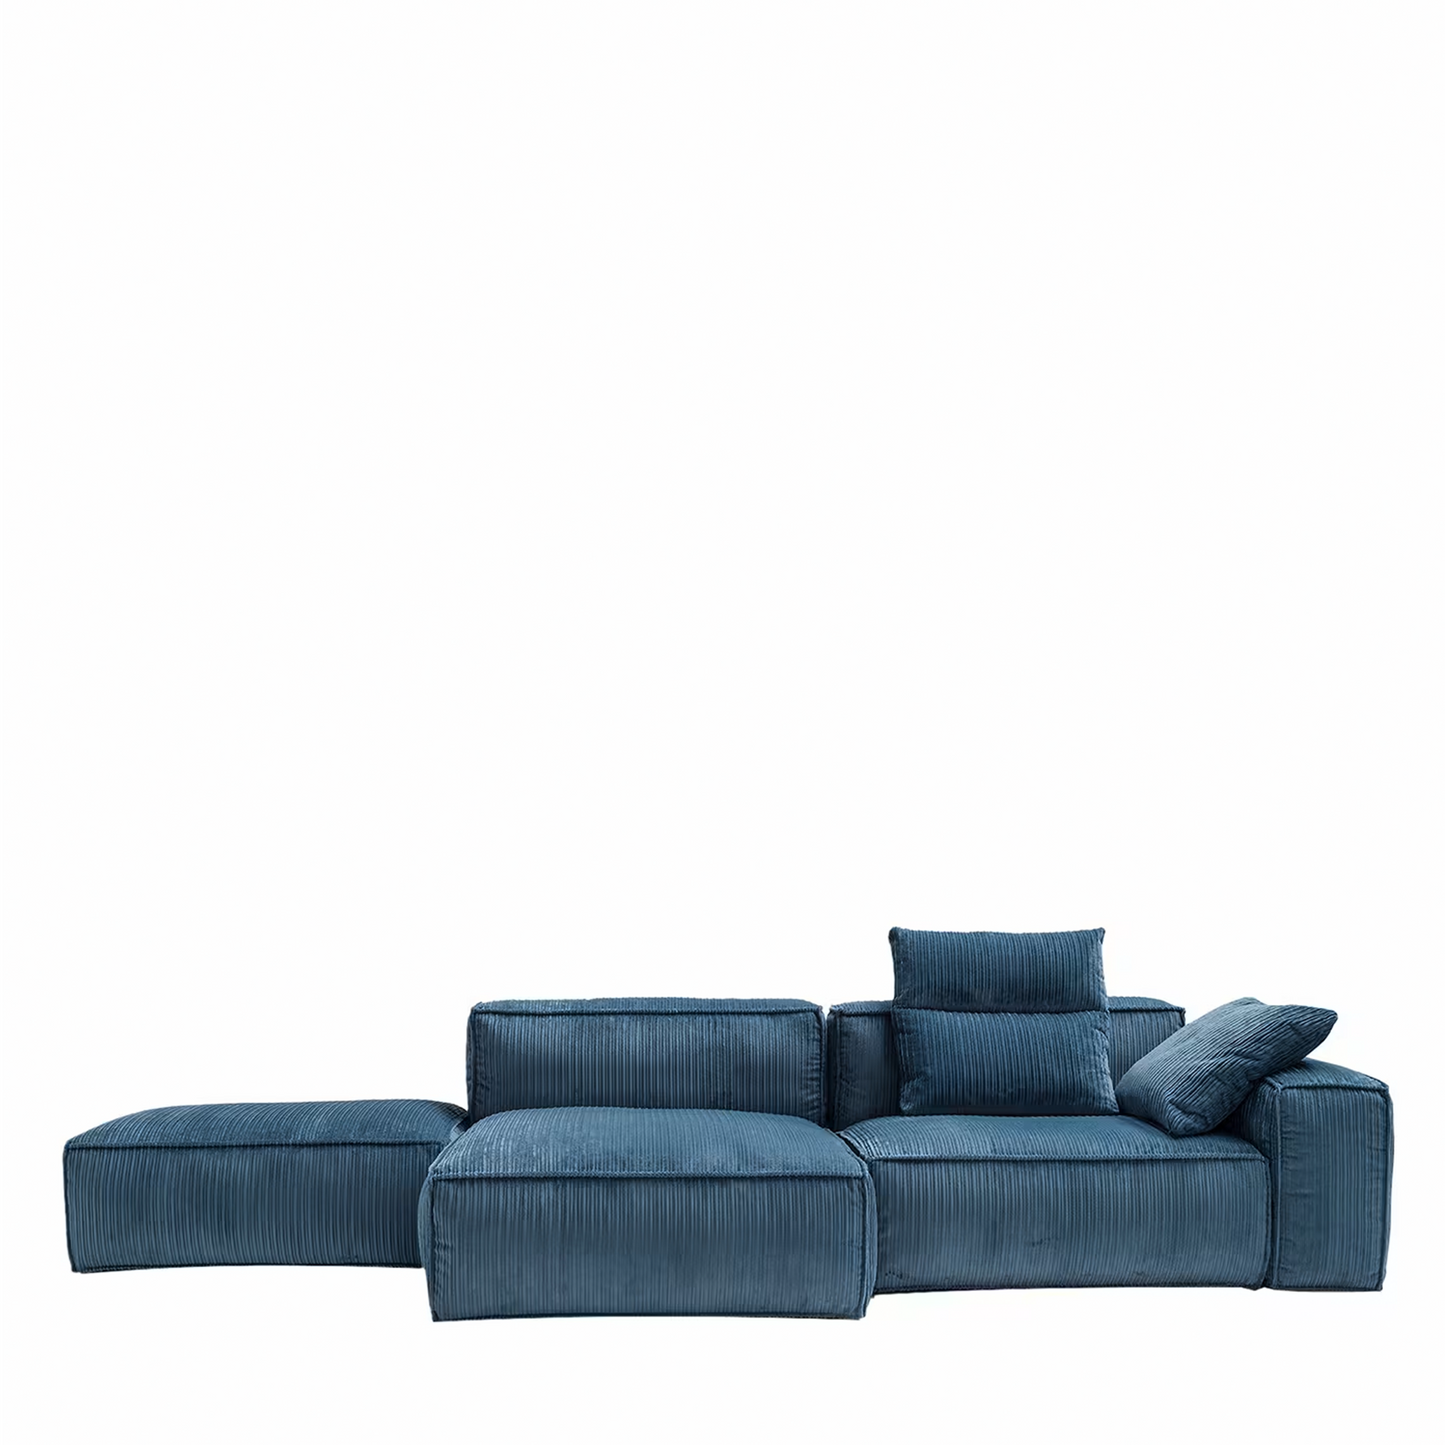 Franco Ferri Astor sofa